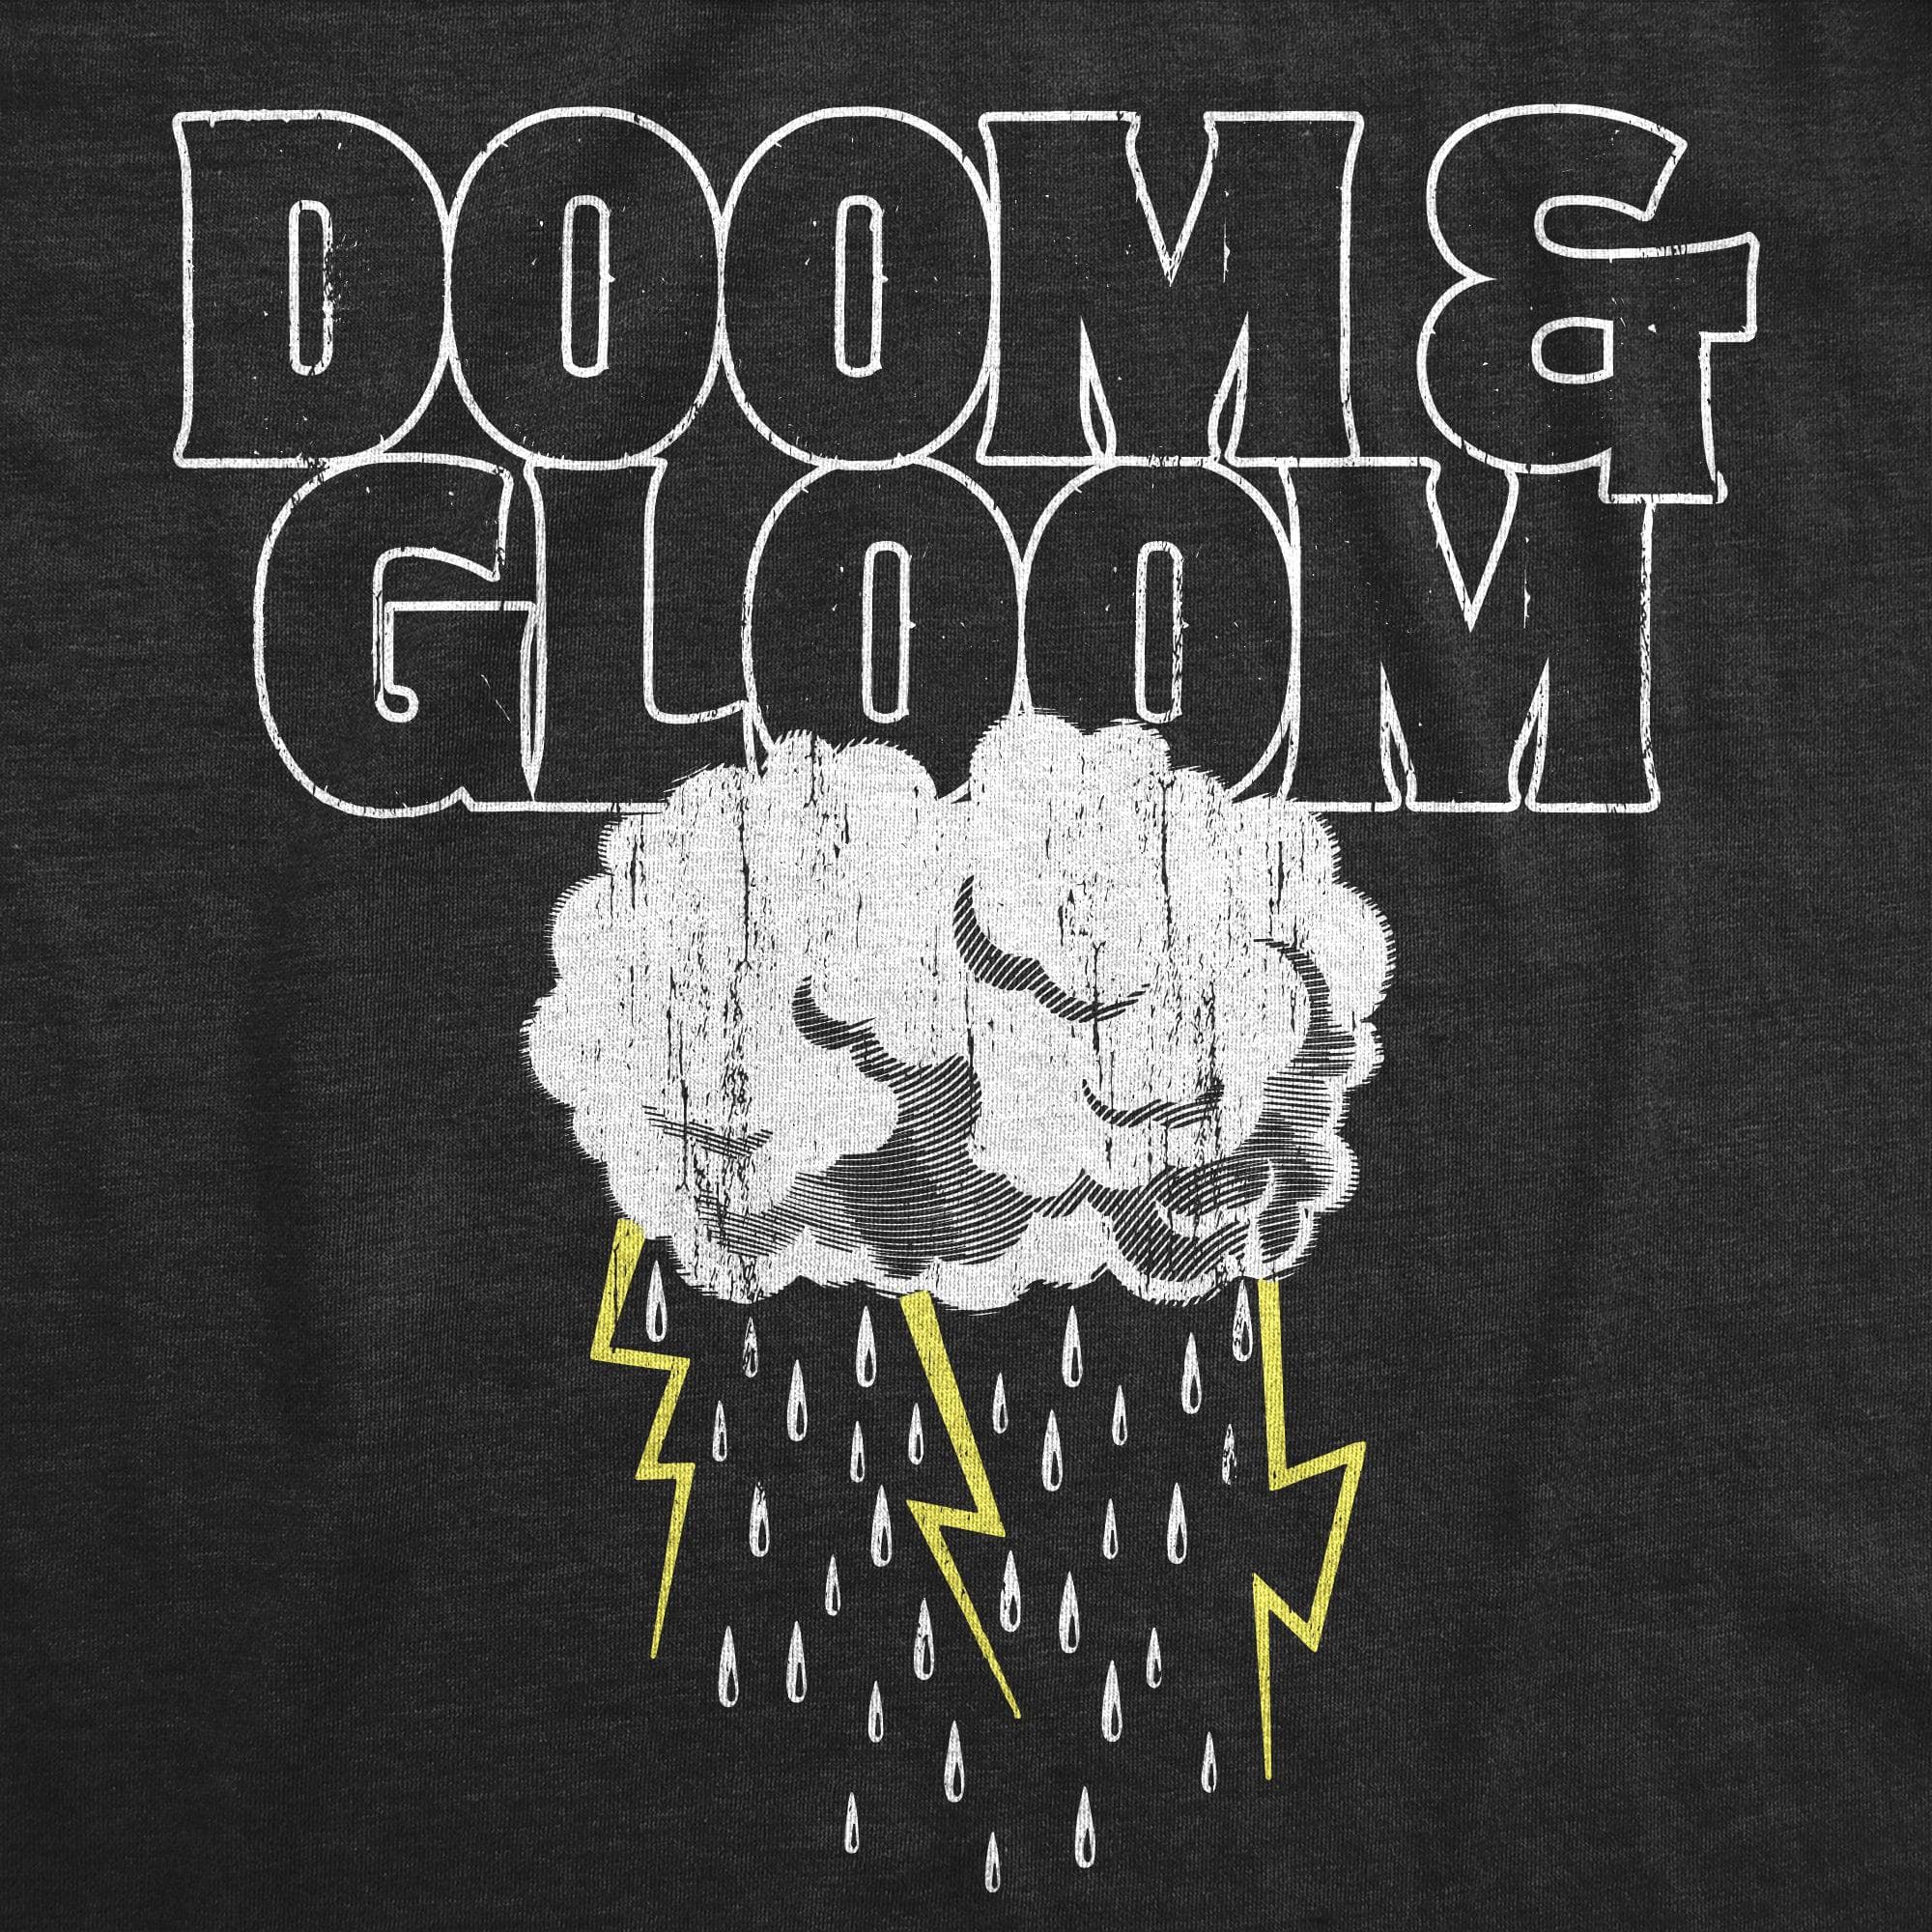 Doom And Gloom Men's Tshirt  -  Crazy Dog T-Shirts